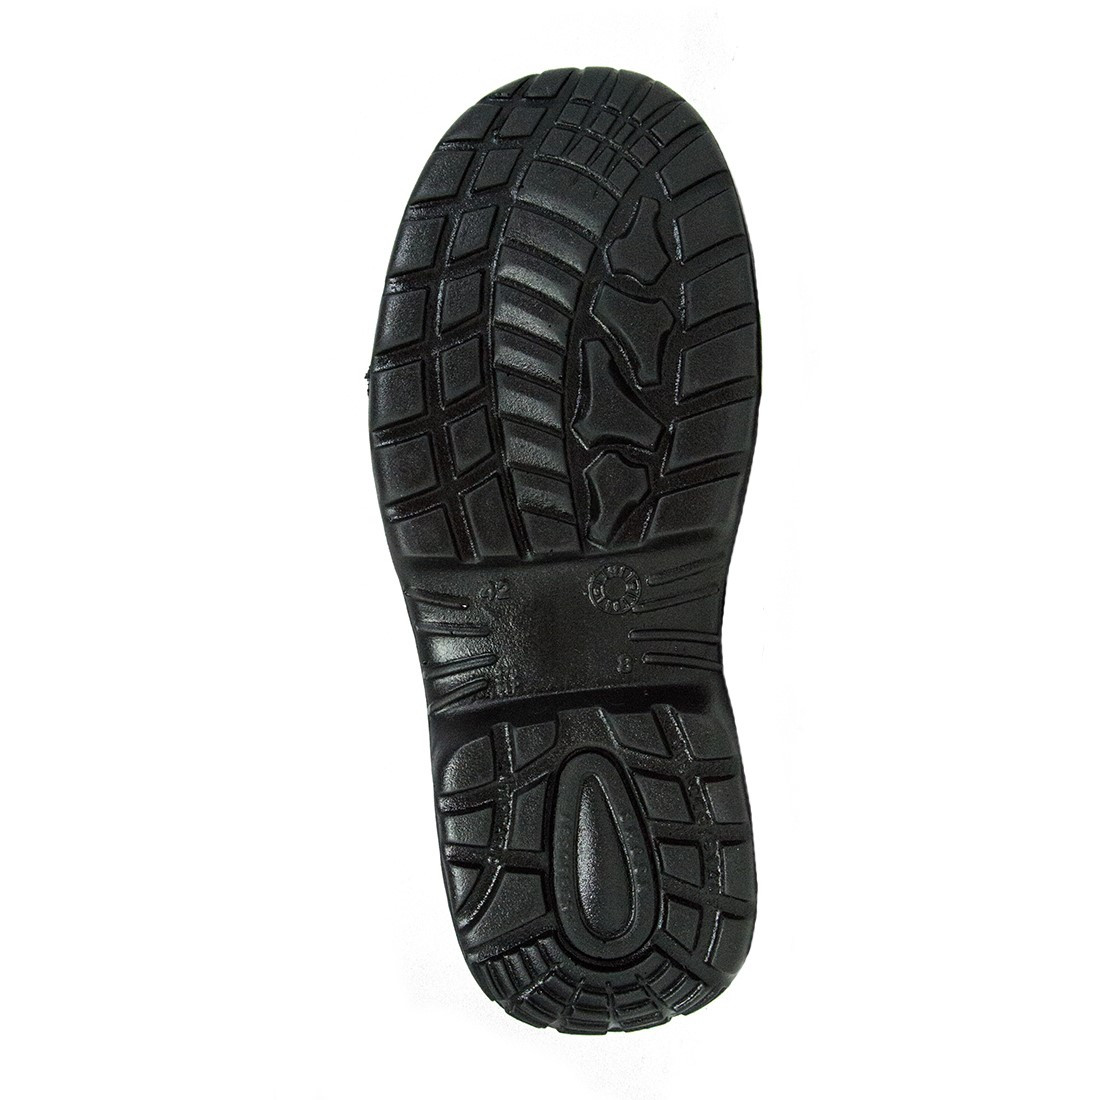 Garribaldi Shoe S1P SRC - Calzado de protección